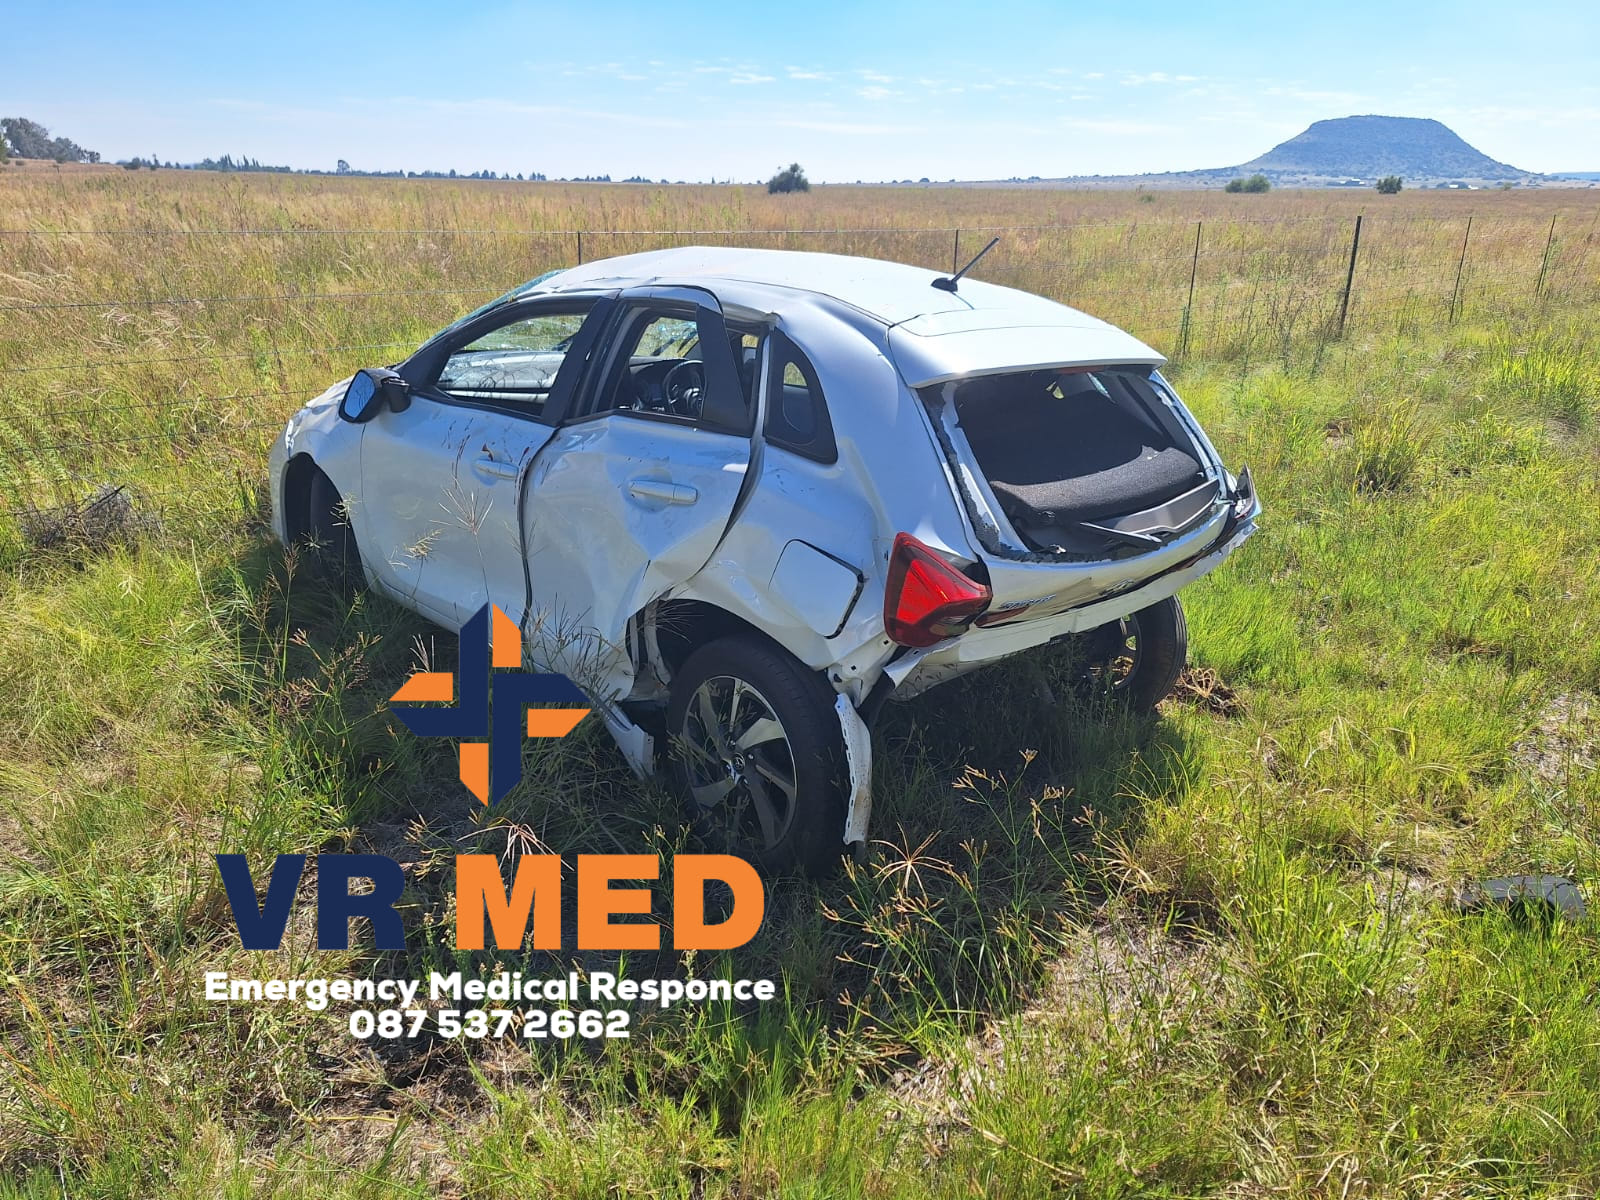 Minor injuries after a rear-end crash near Bloemfontein